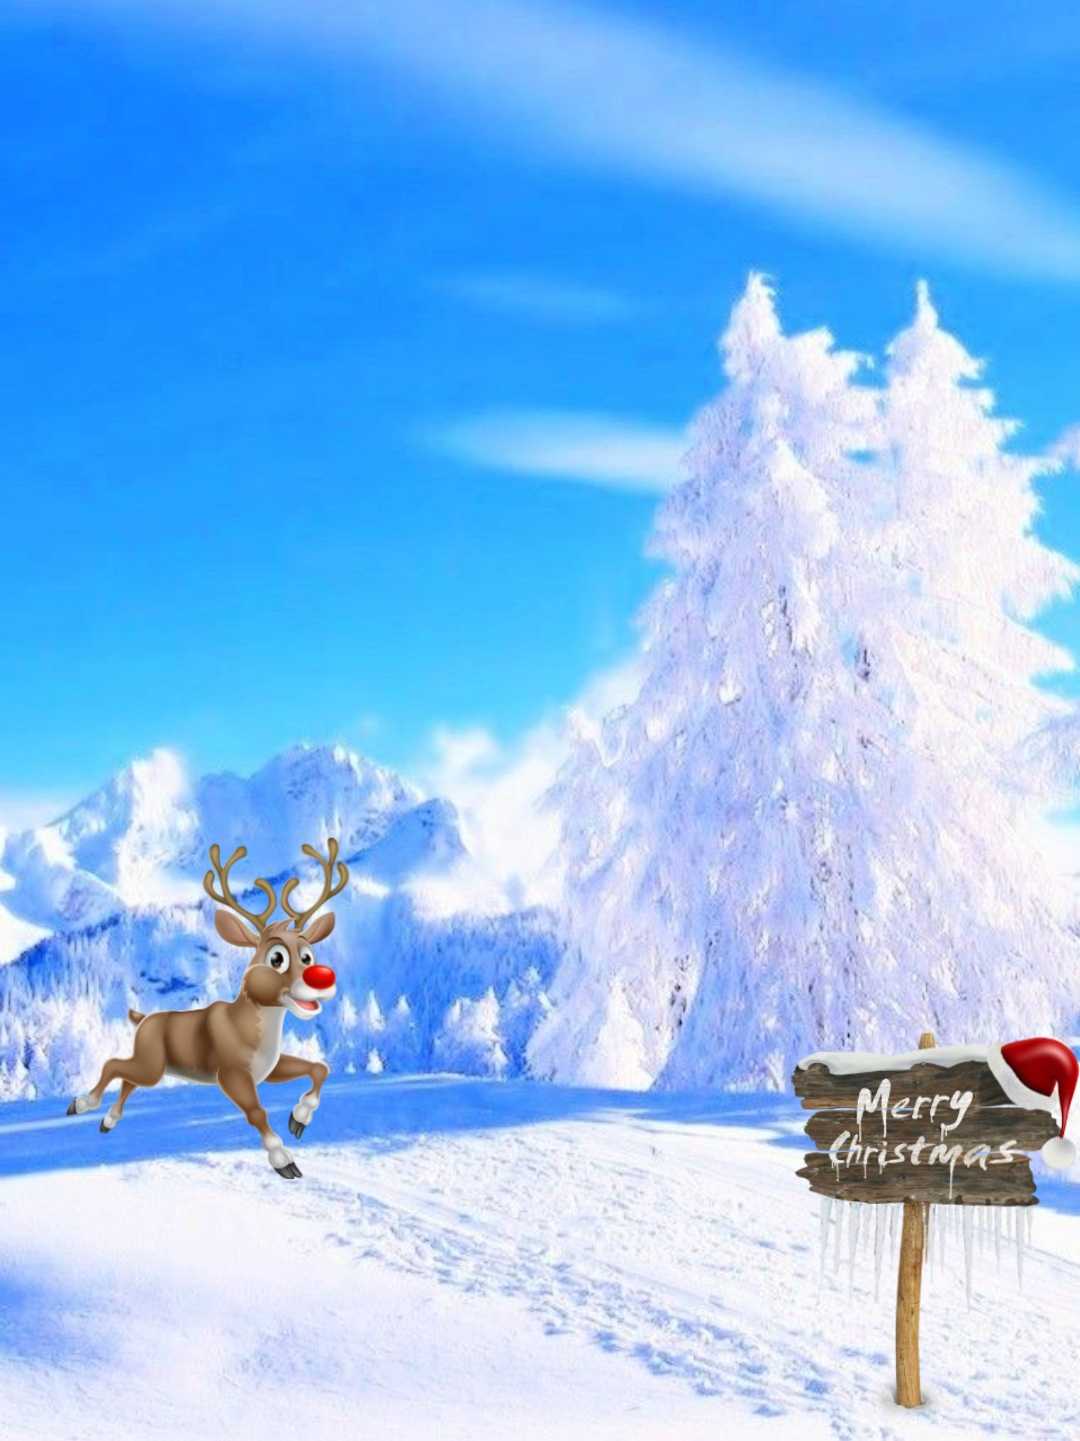 Christmas editing background